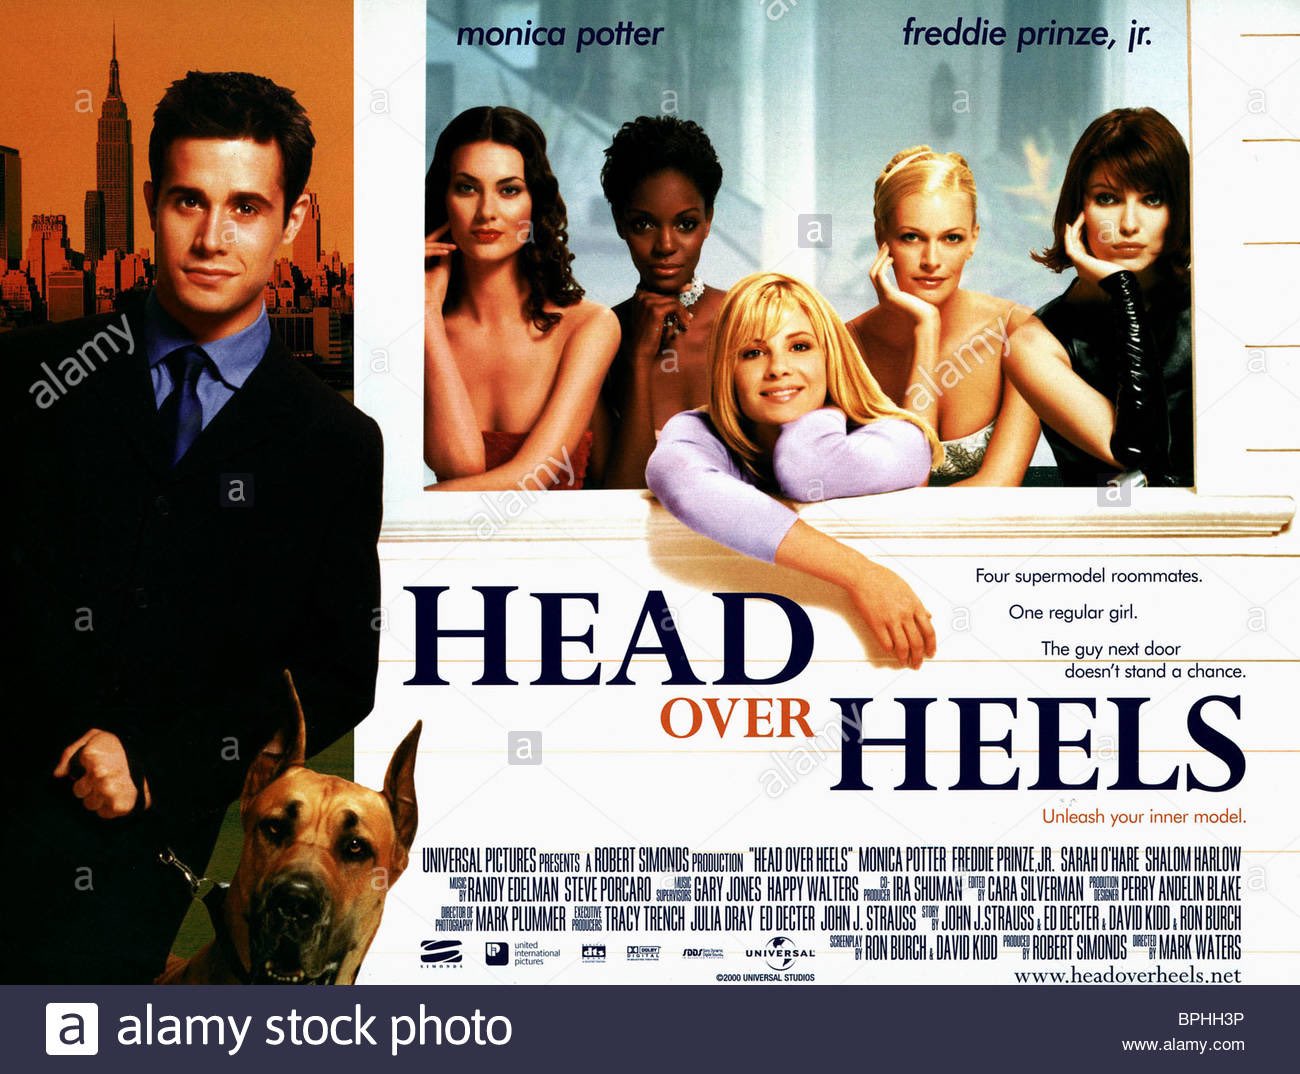 Head Over Heels (2001) Sexual Content | CringeMDb.com